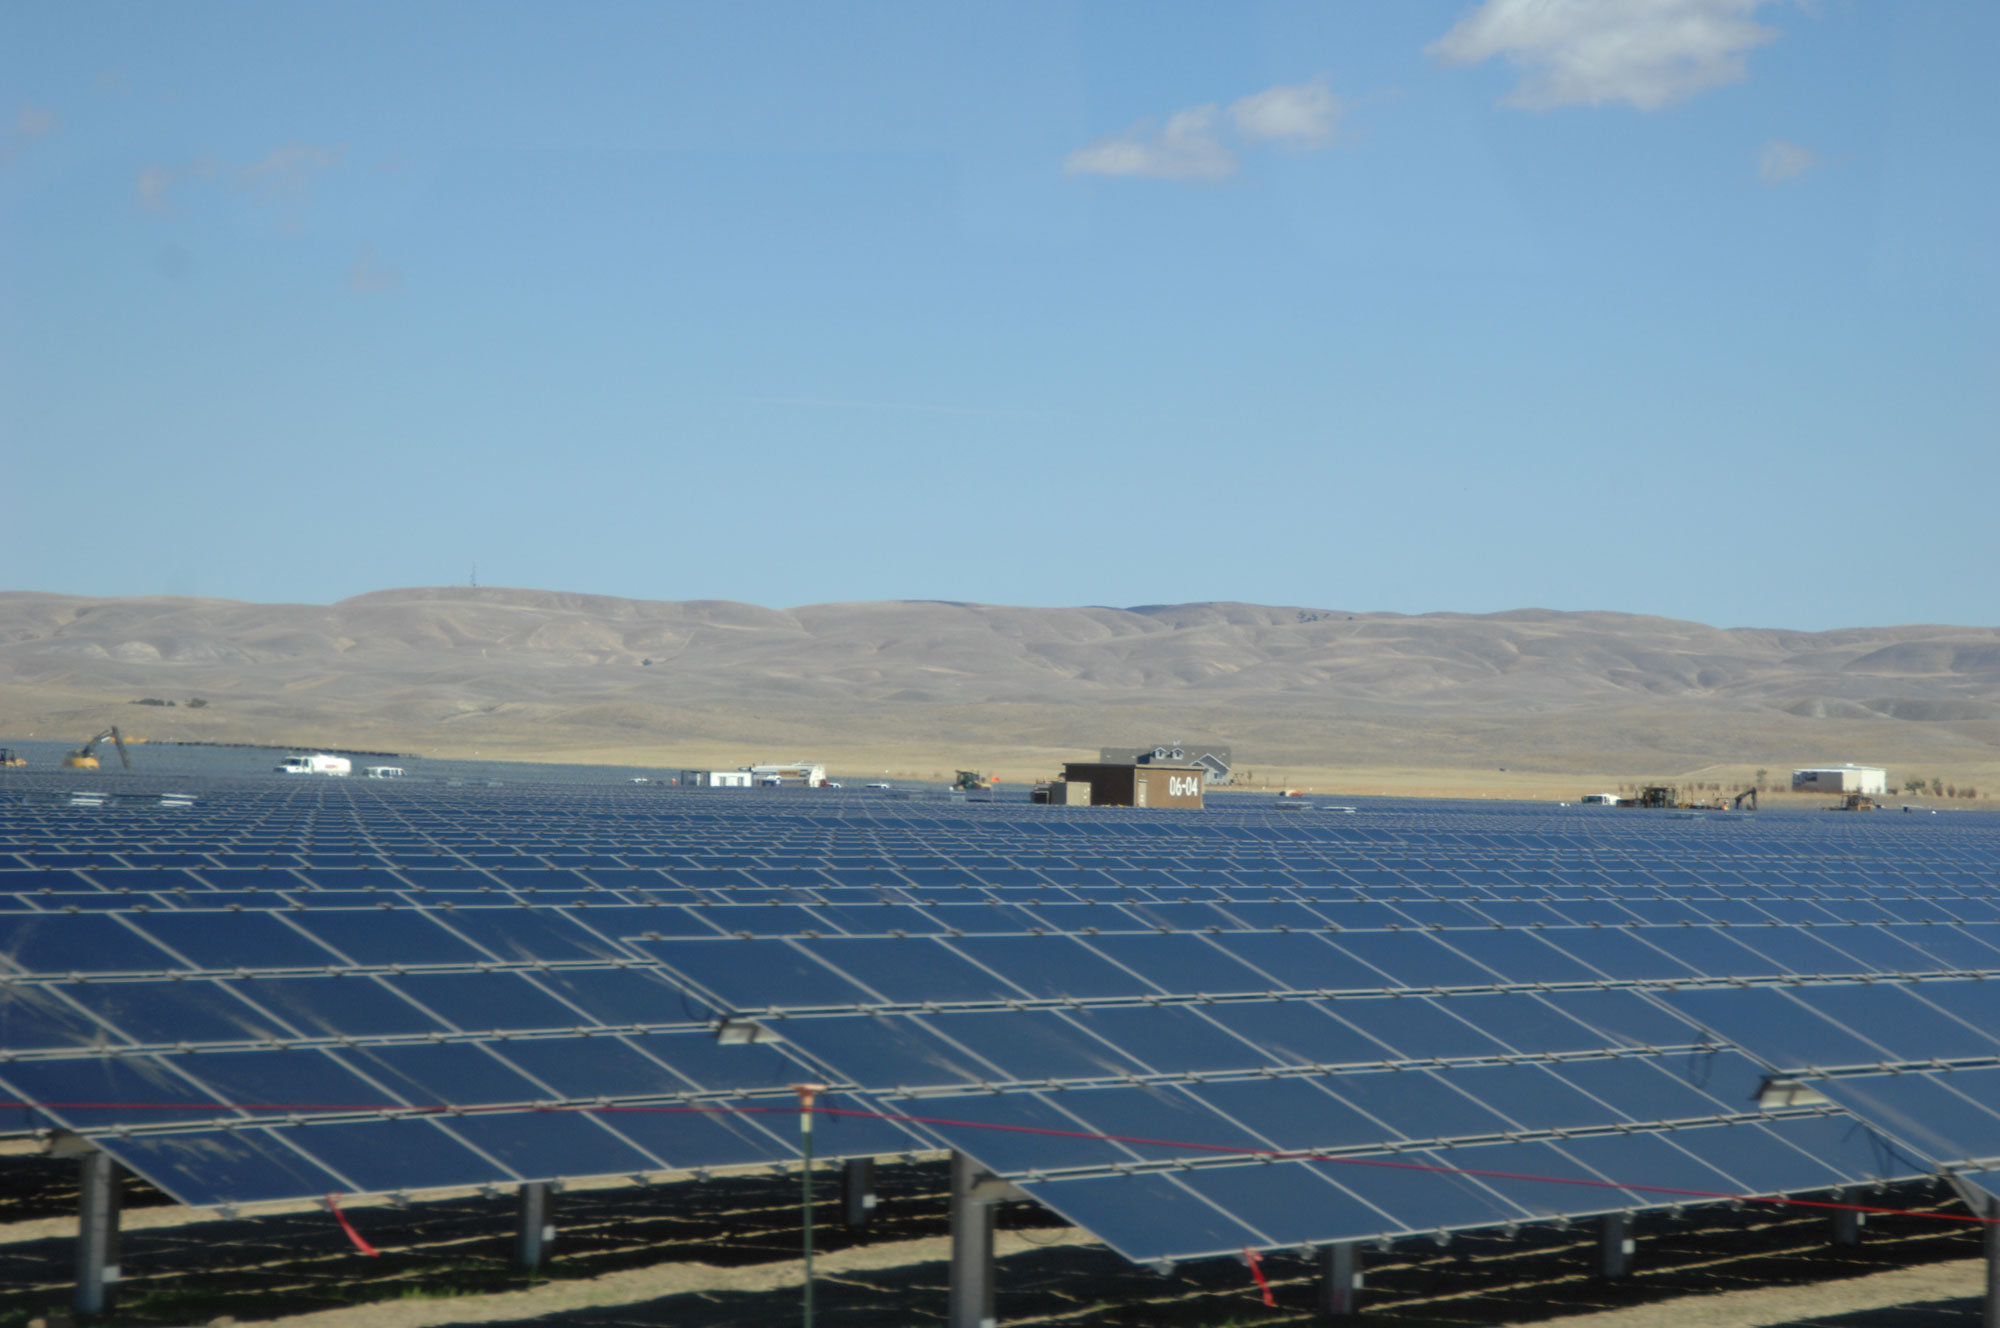 Photograph of solar panels of the Topaz Solar Farm in San Luis Obispo County, California.